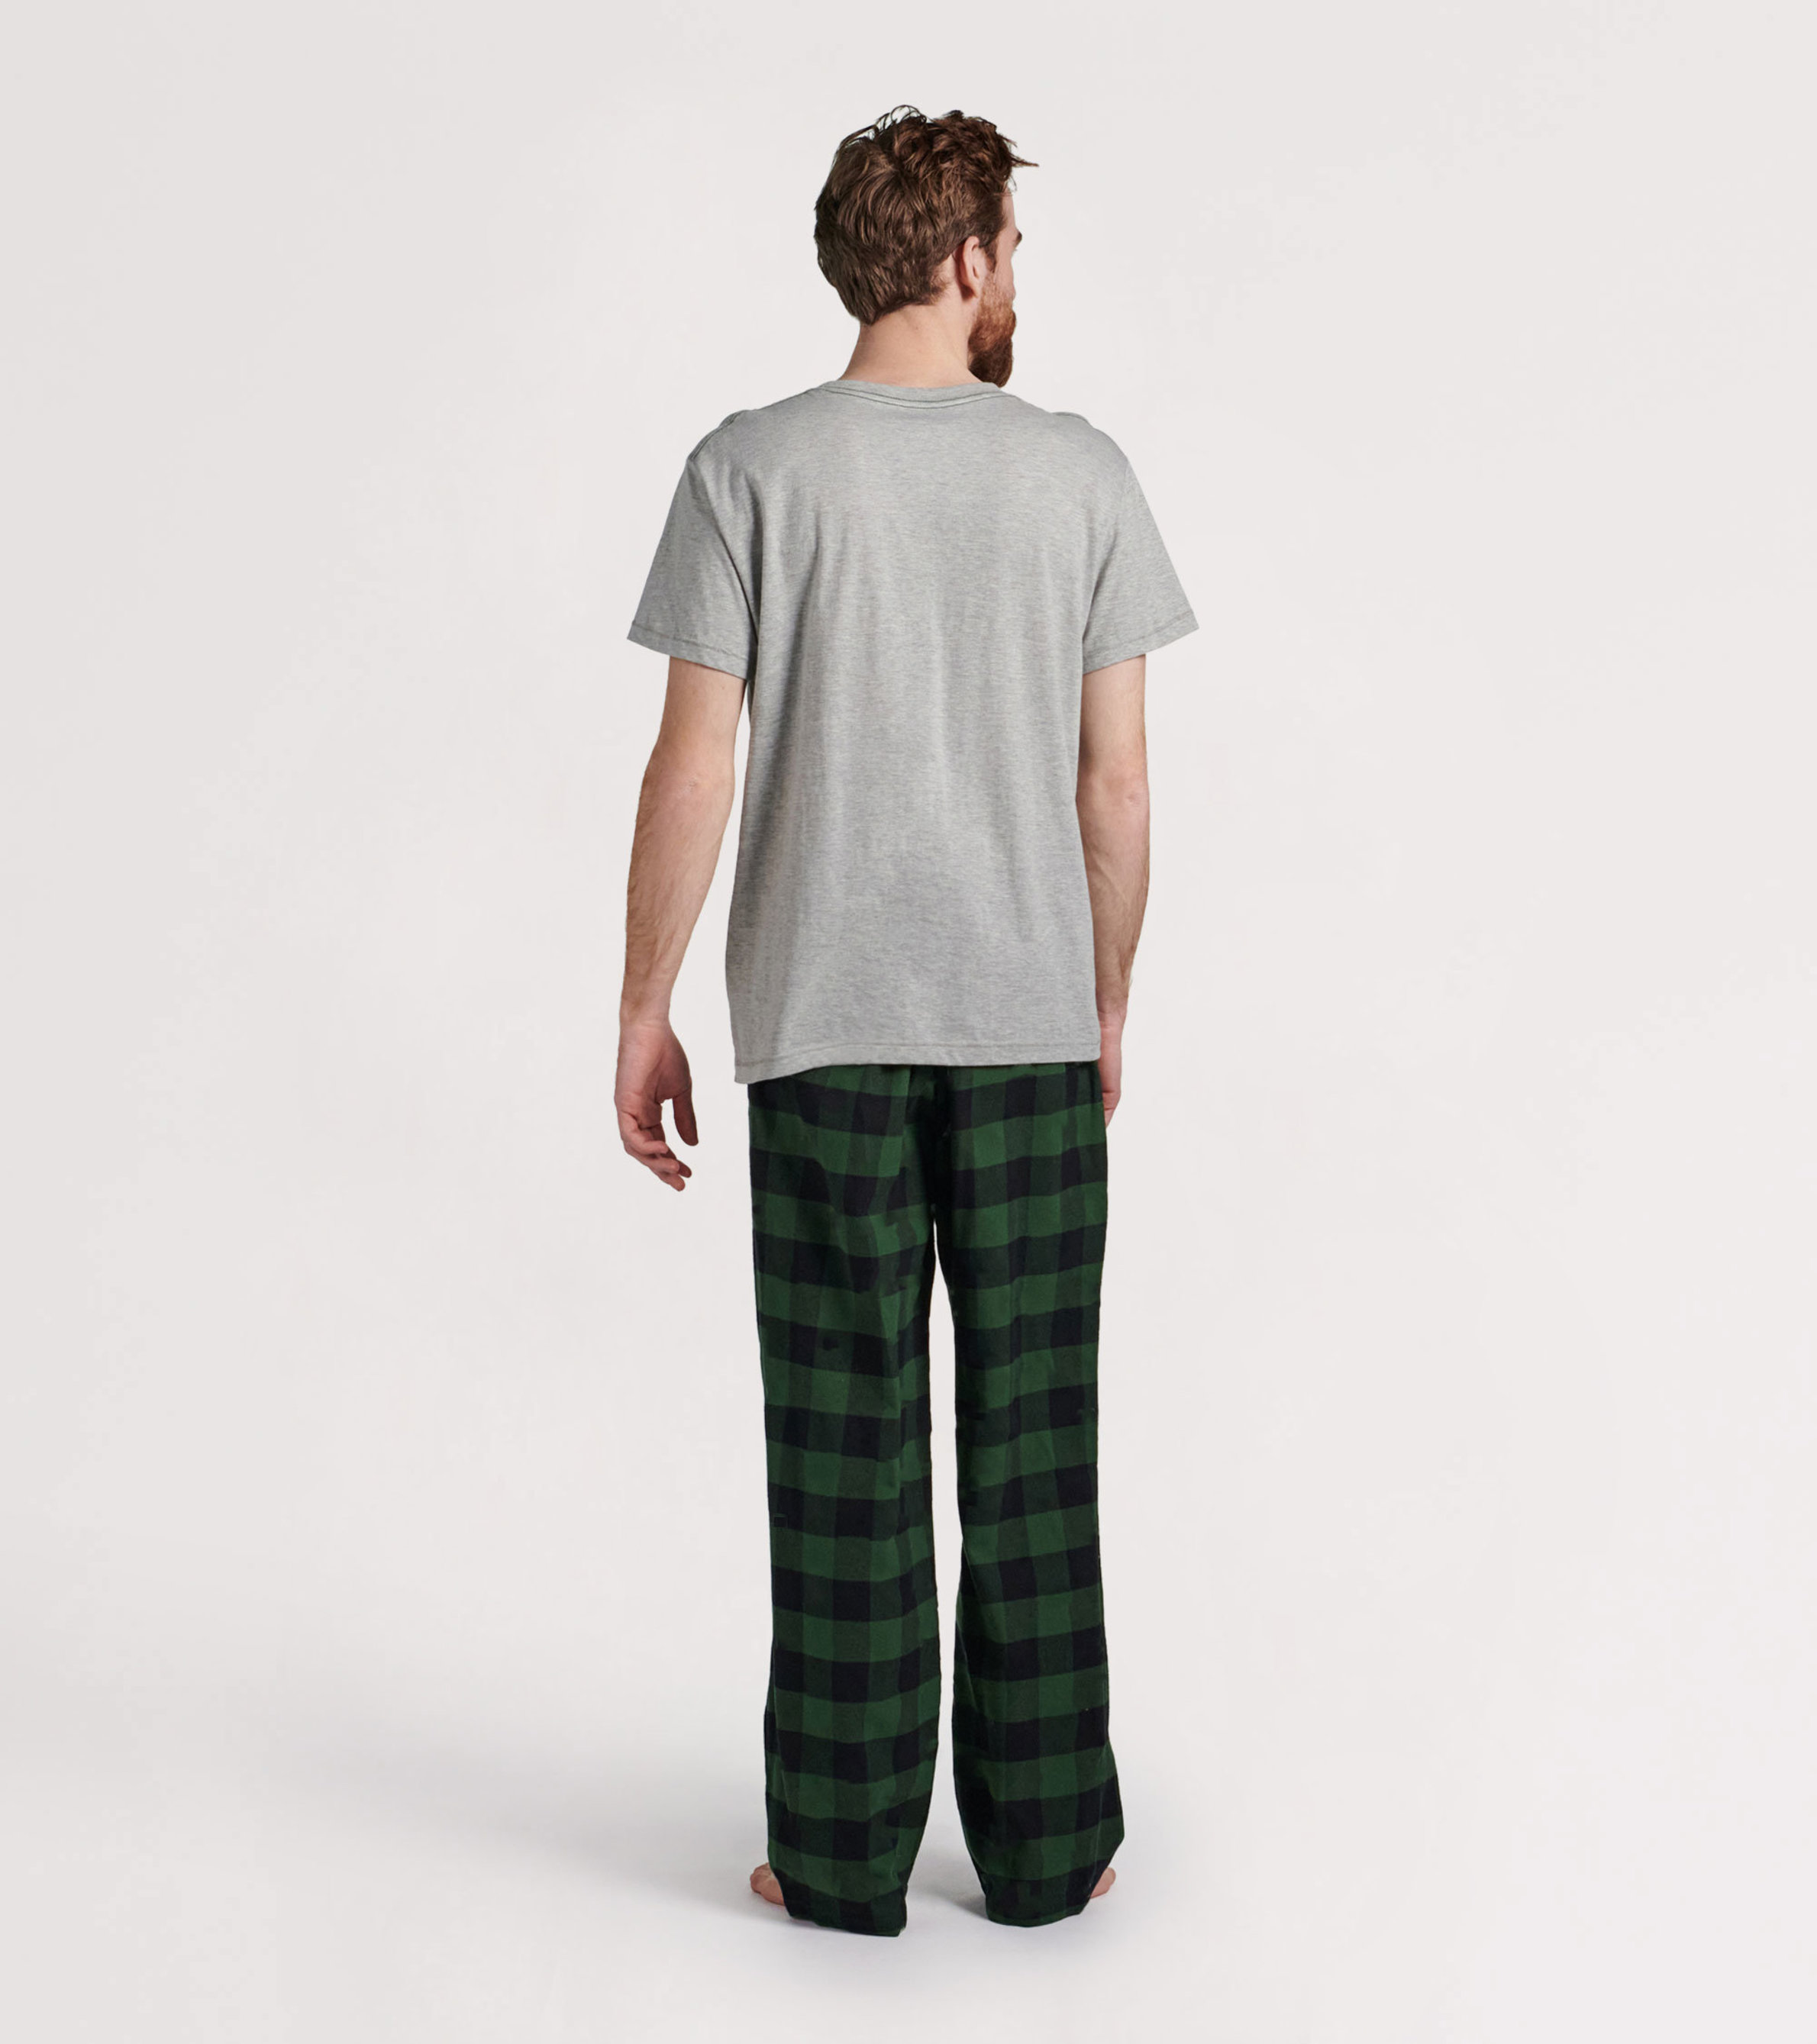 ILUVIT Mens Cotton Pajama Pants Flannel Men Sleep Pant Lounge